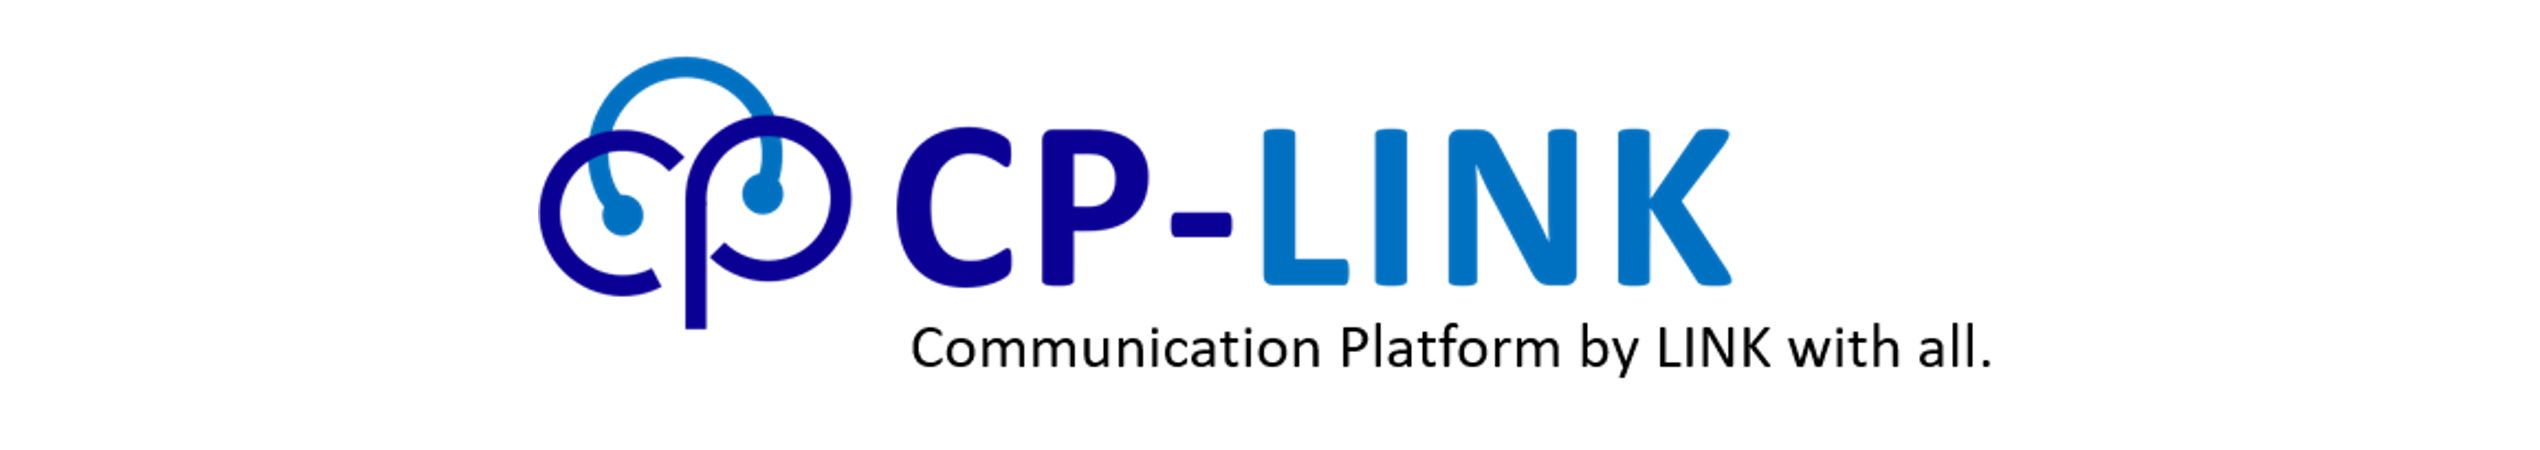 cp-link_logo